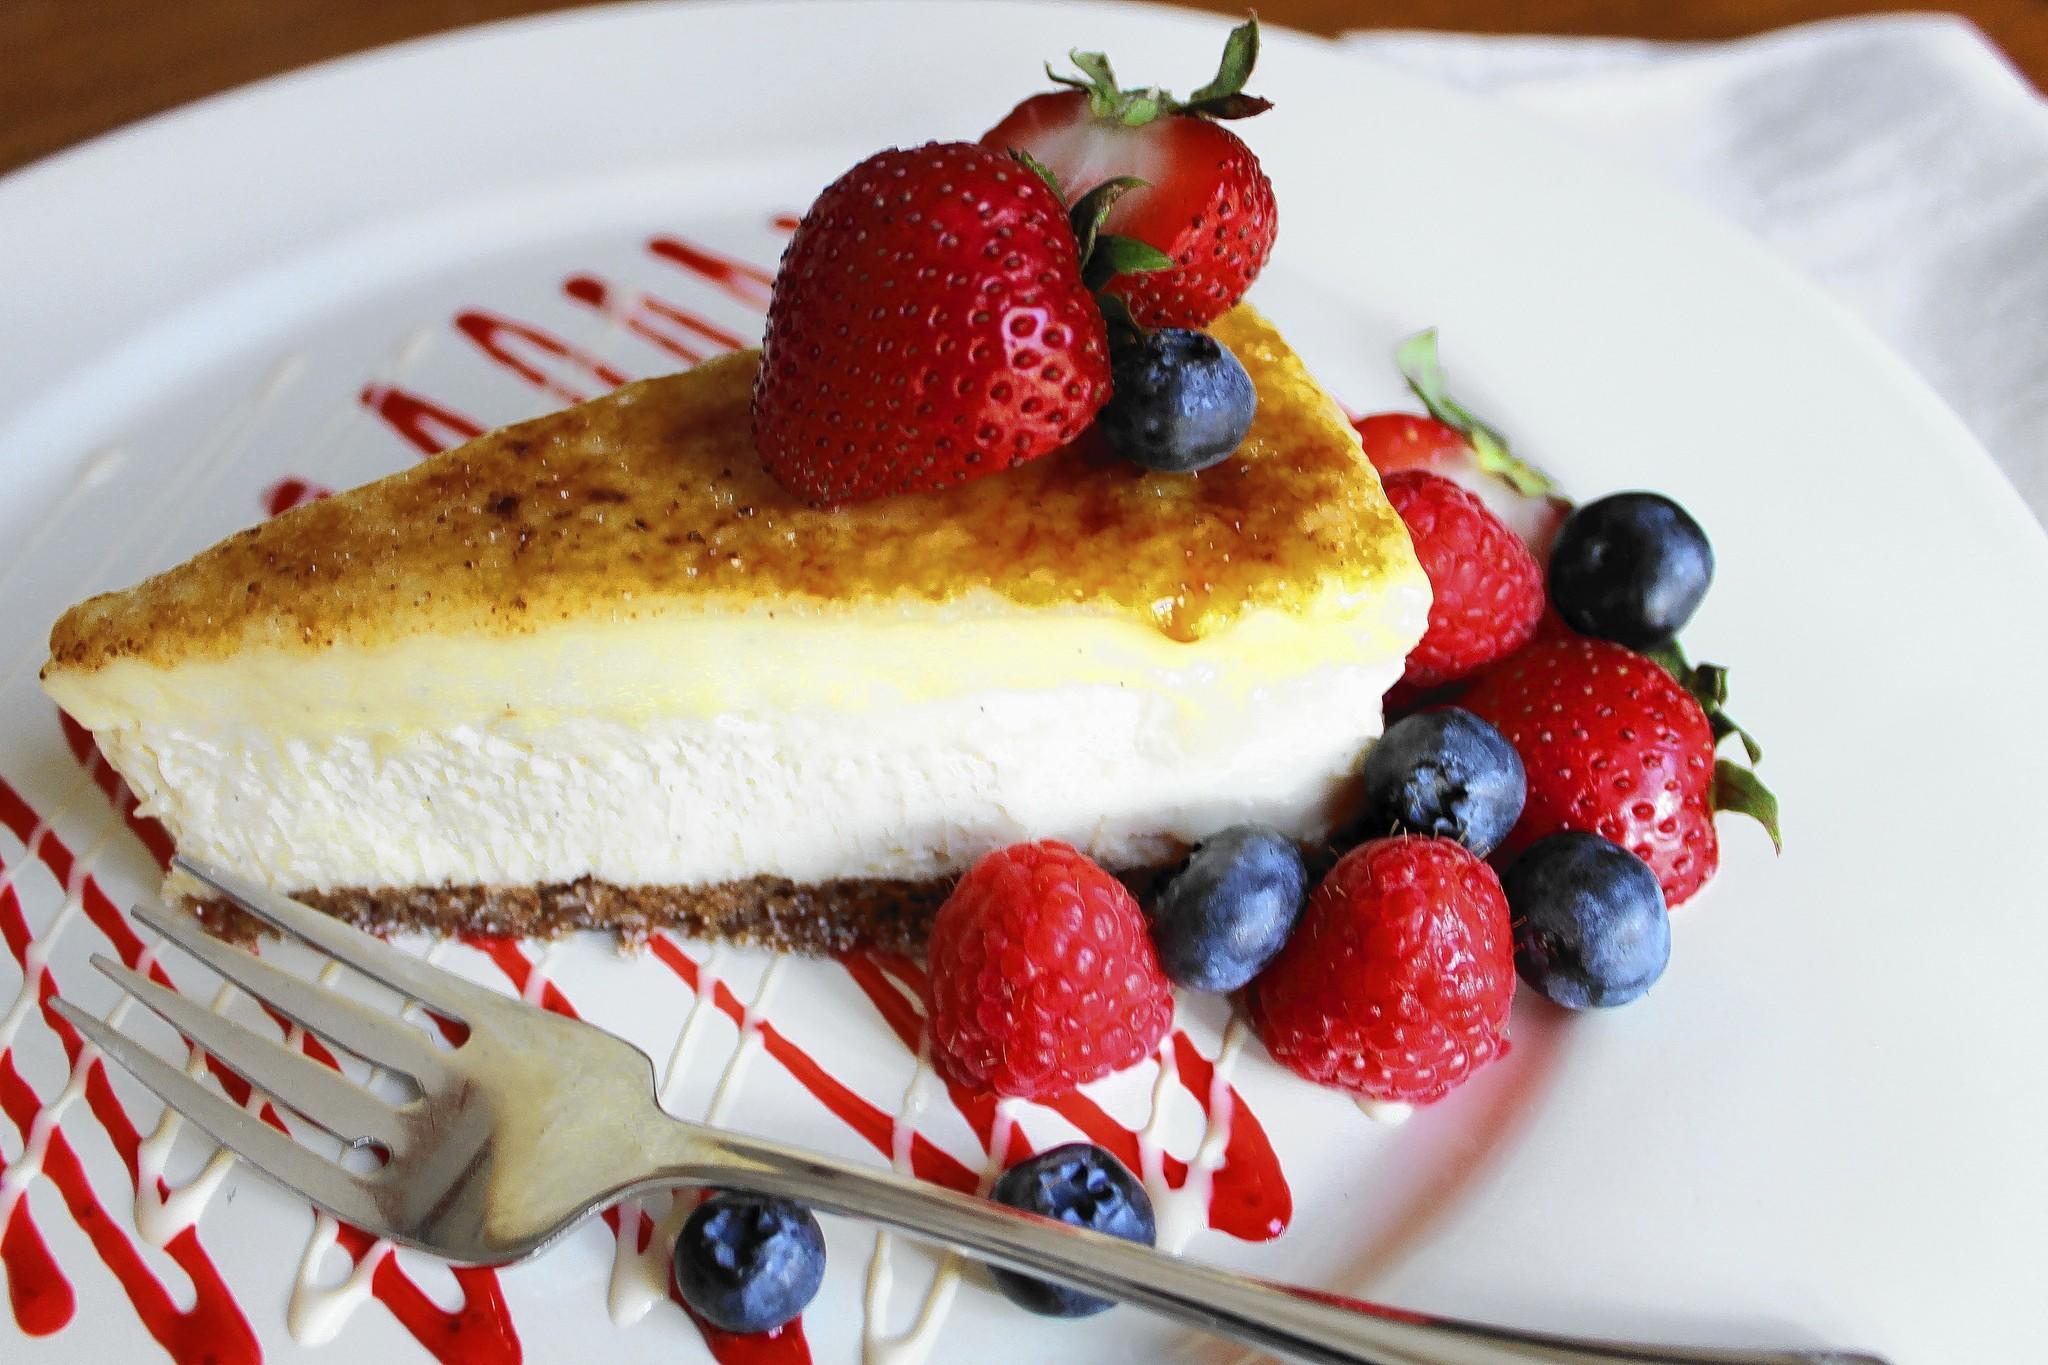 Creme Brulee Cheesecake is two desserts in one - tribunedigital-sunsentinel